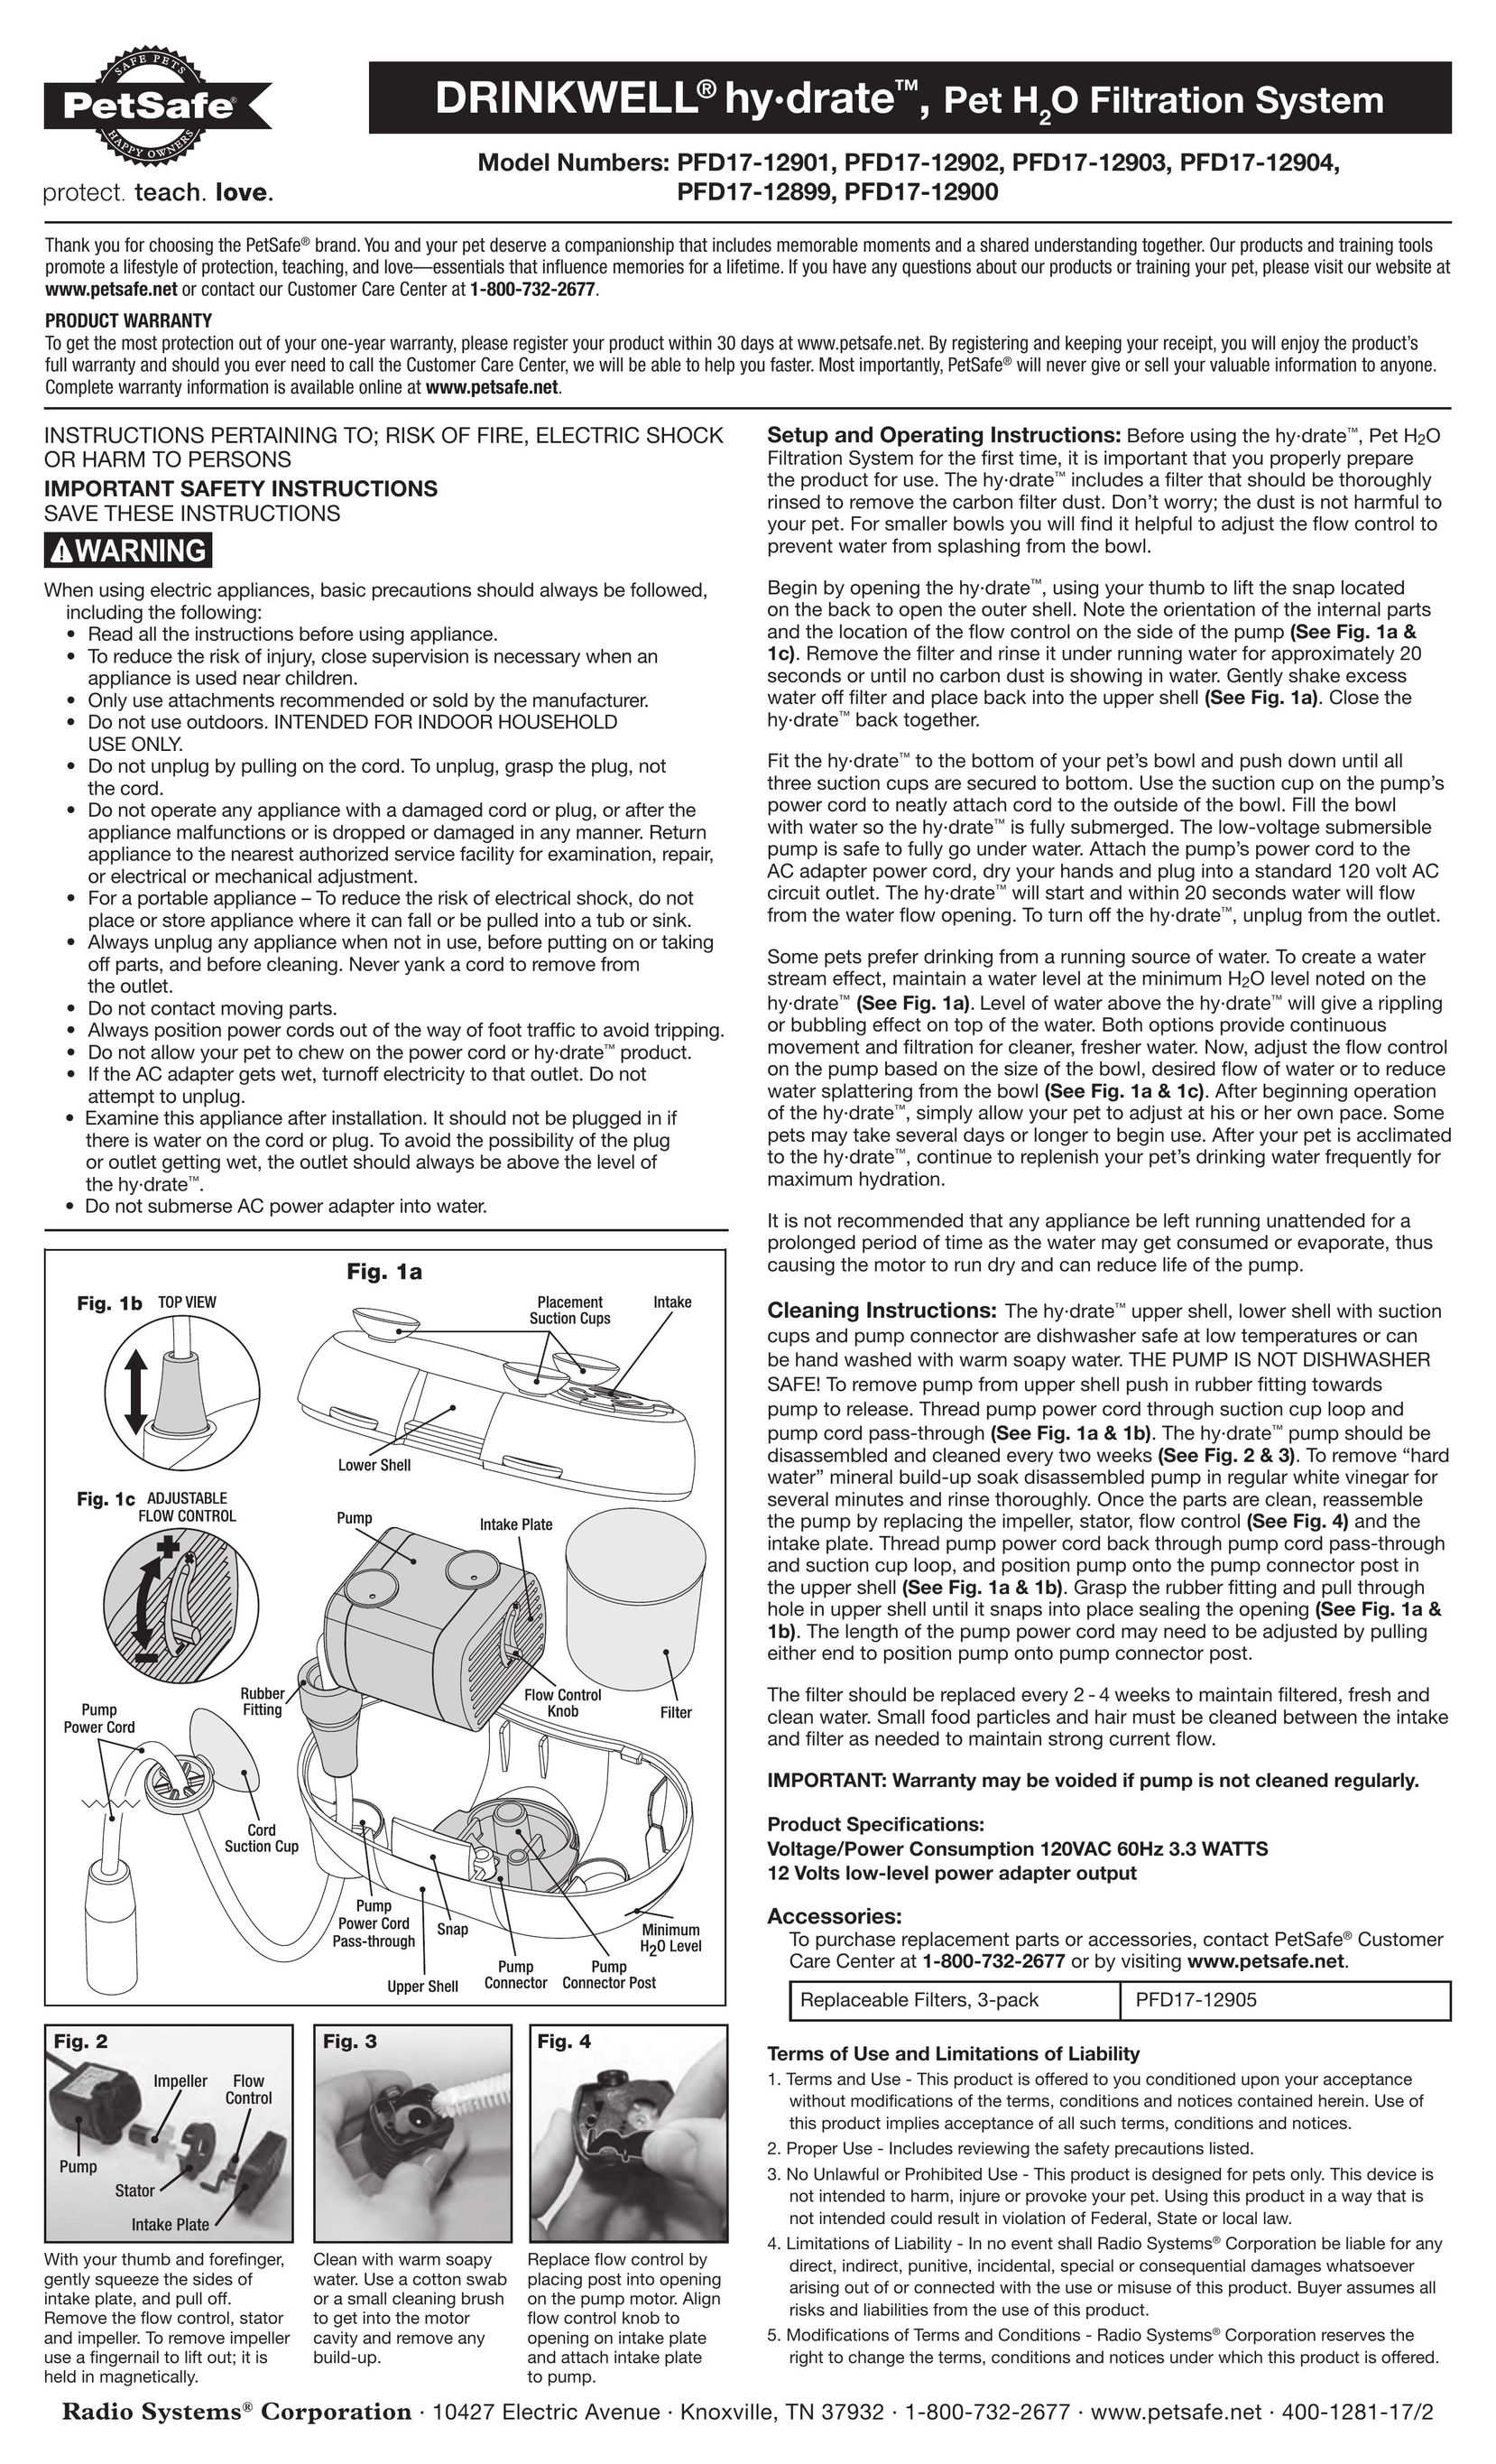 Petsafe PFD17-12903 Water System User Manual